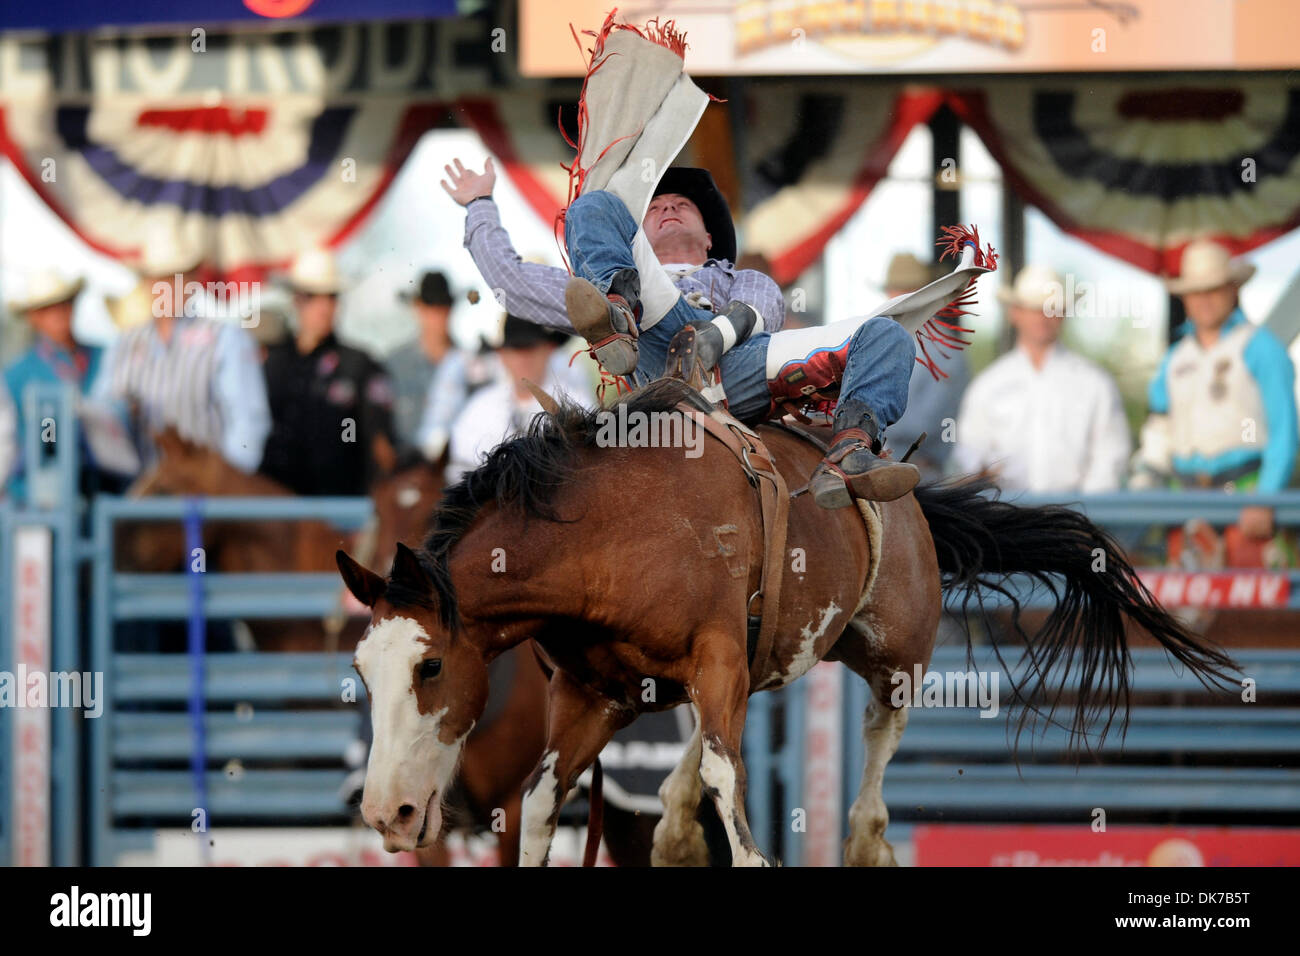 June 18, 2011 - Reno, Nevada, U.S - Eric Swenson of Denison, TX rides What's Up at the Reno Rodeo. (Credit Image: © Matt Cohen/Southcreek Global/ZUMAPRESS.com) Stock Photo